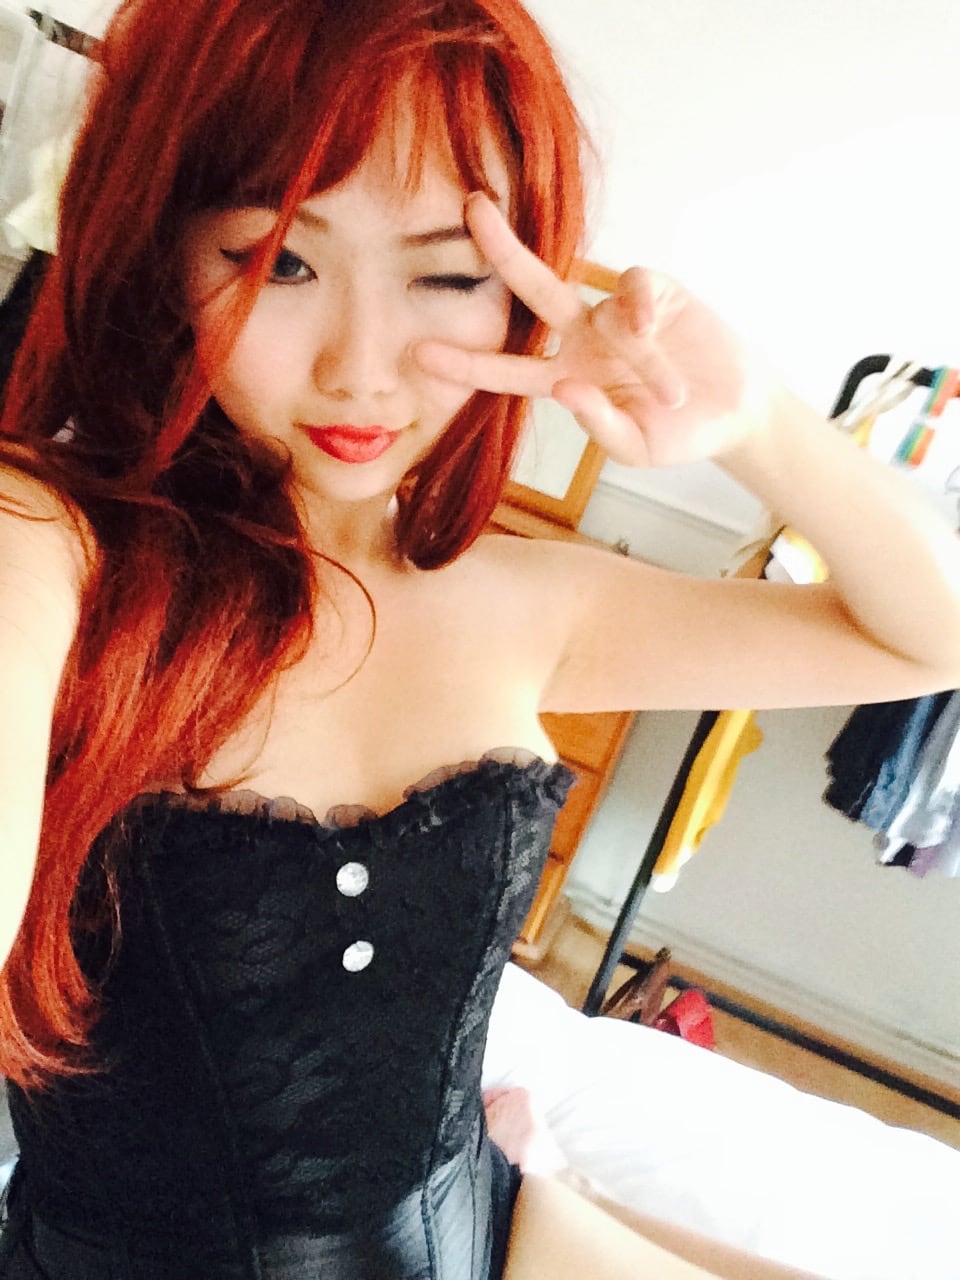 Redhead corset selfie doing peace sign